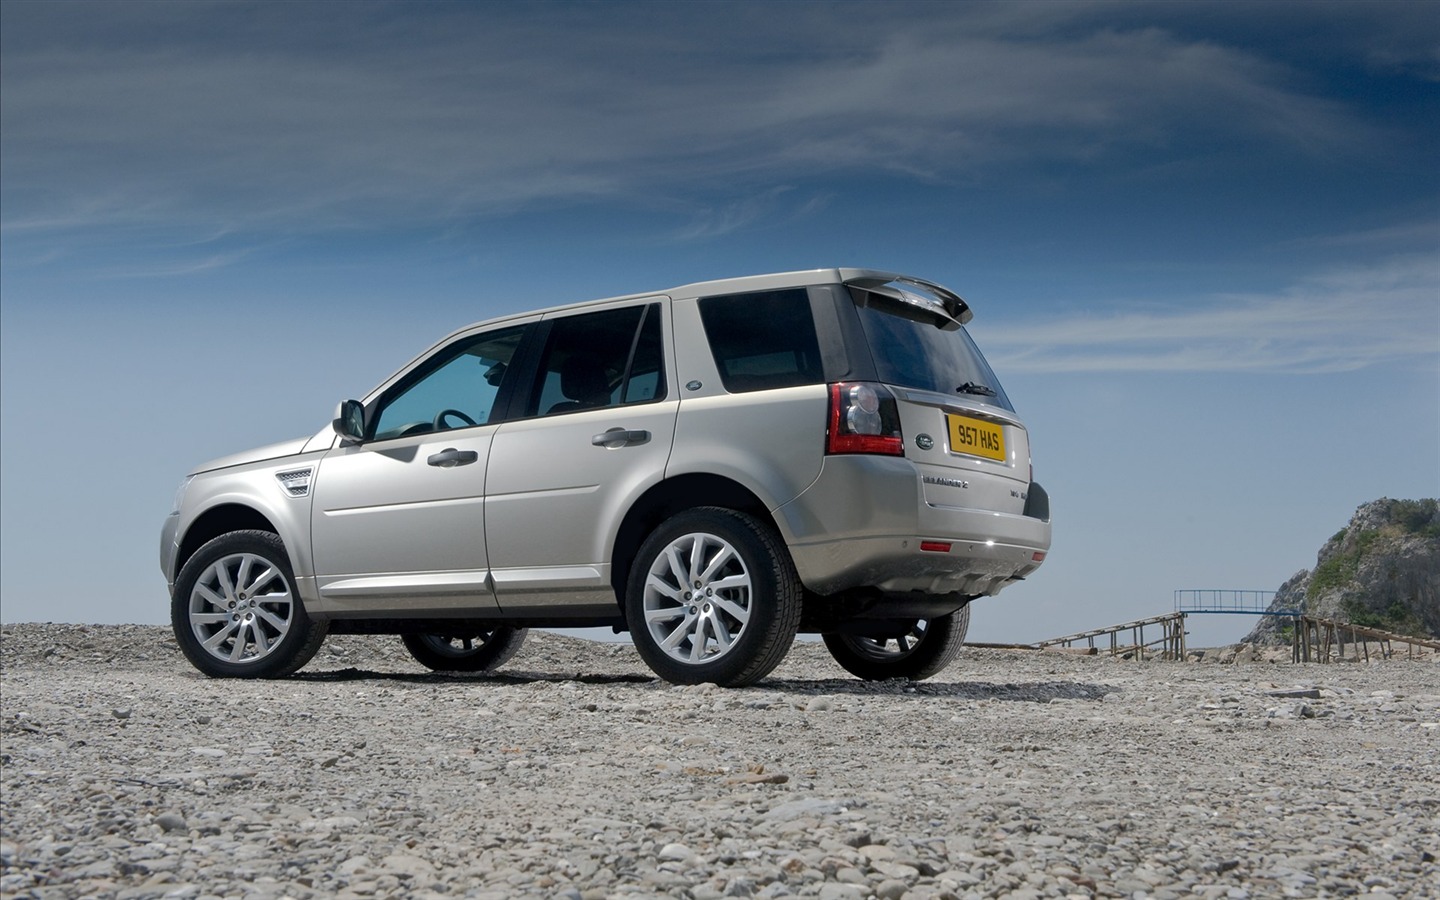 Land Rover fonds d'écran 2011 (1) #7 - 1440x900